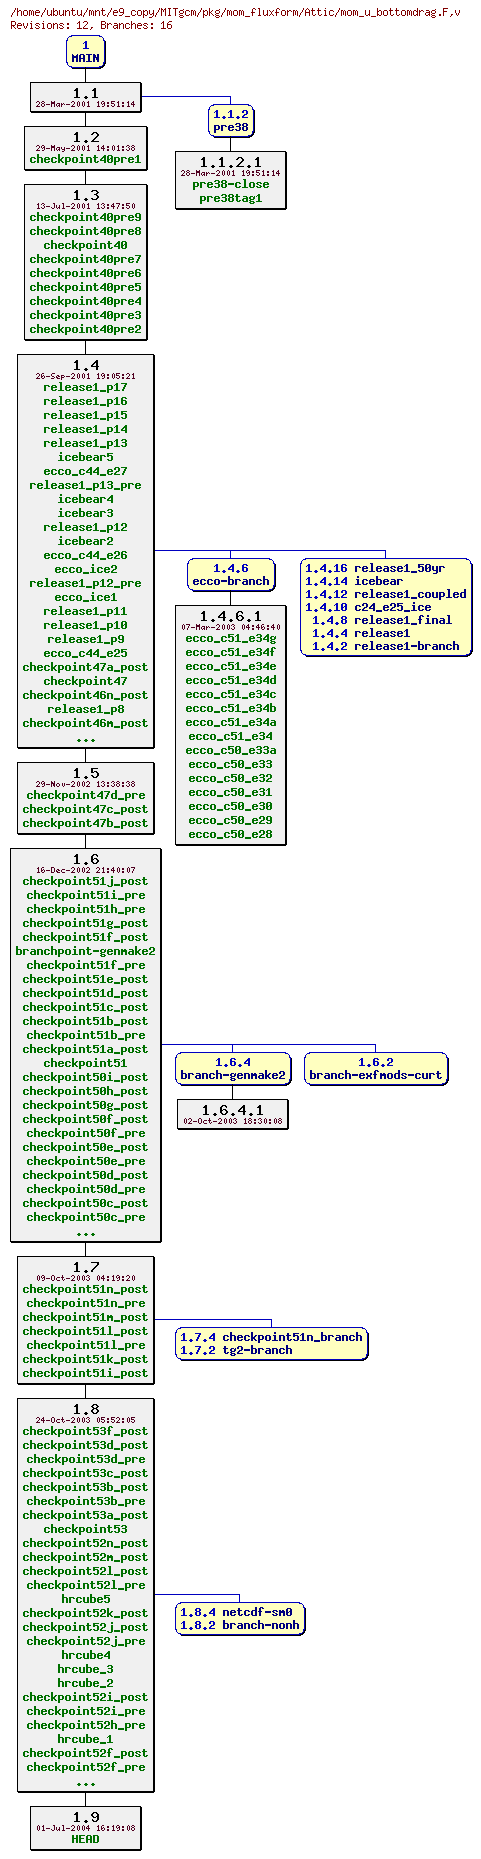 Revisions of MITgcm/pkg/mom_fluxform/mom_u_bottomdrag.F